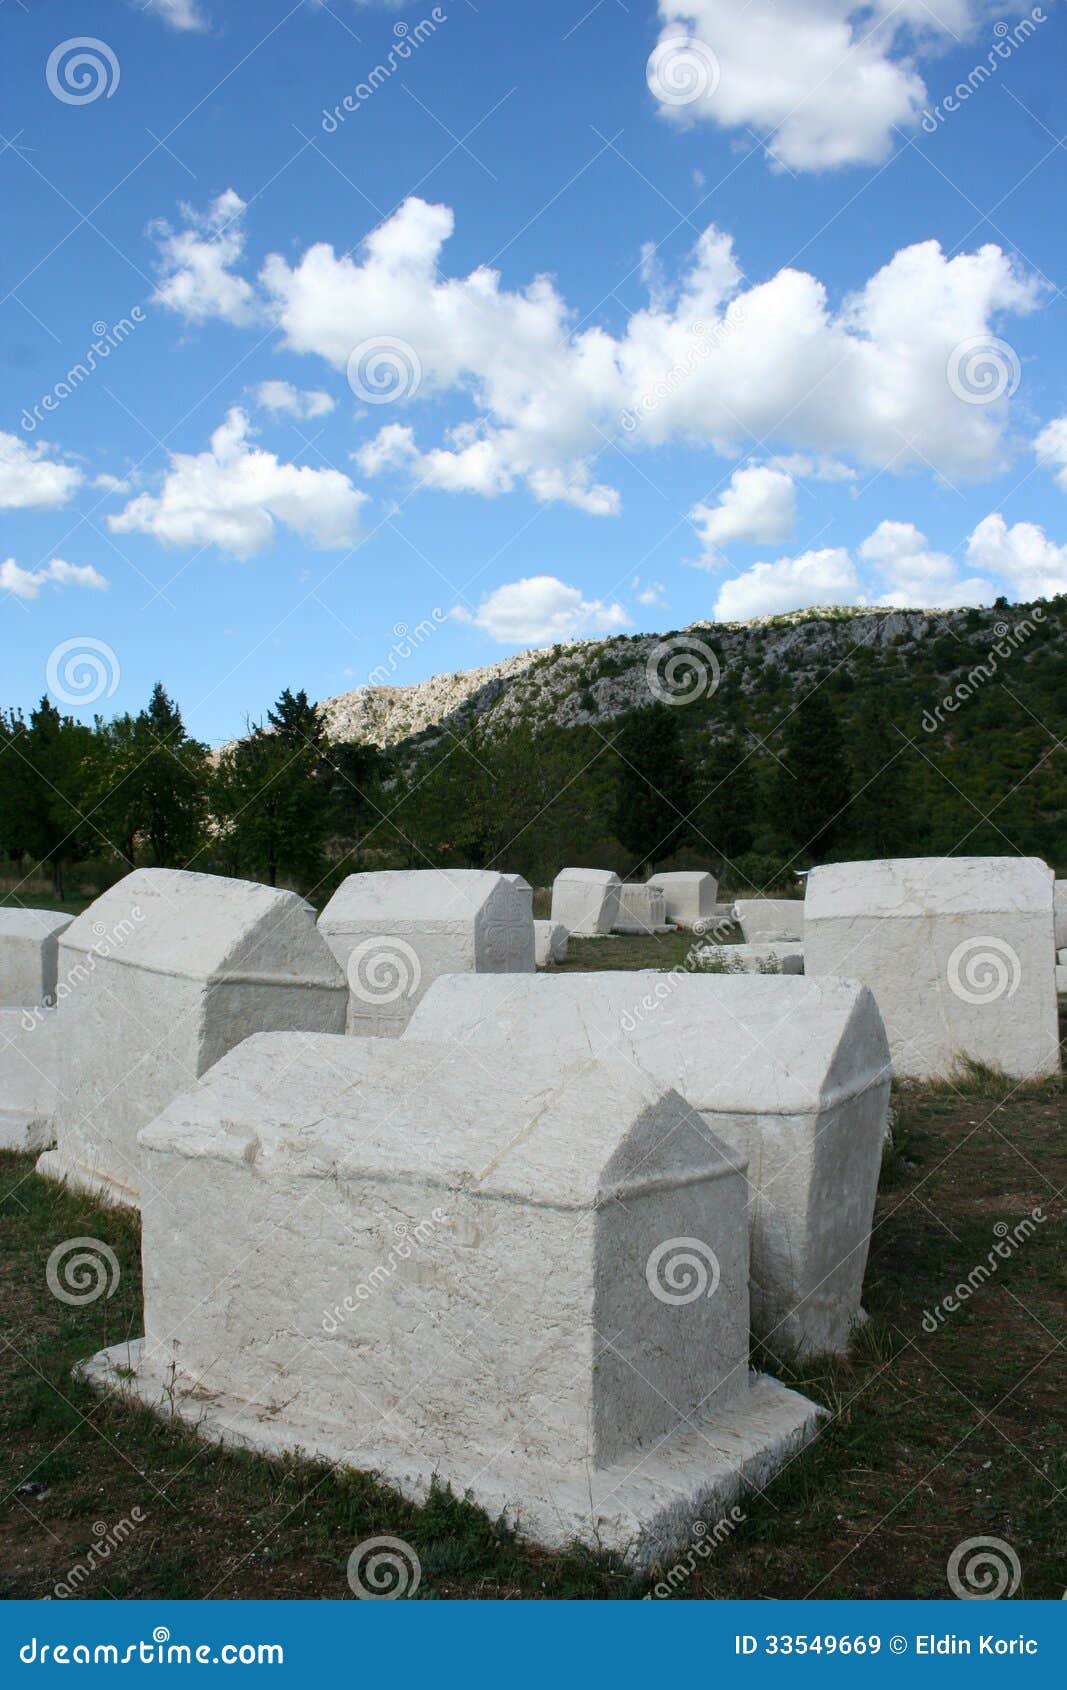 medieval tombstones